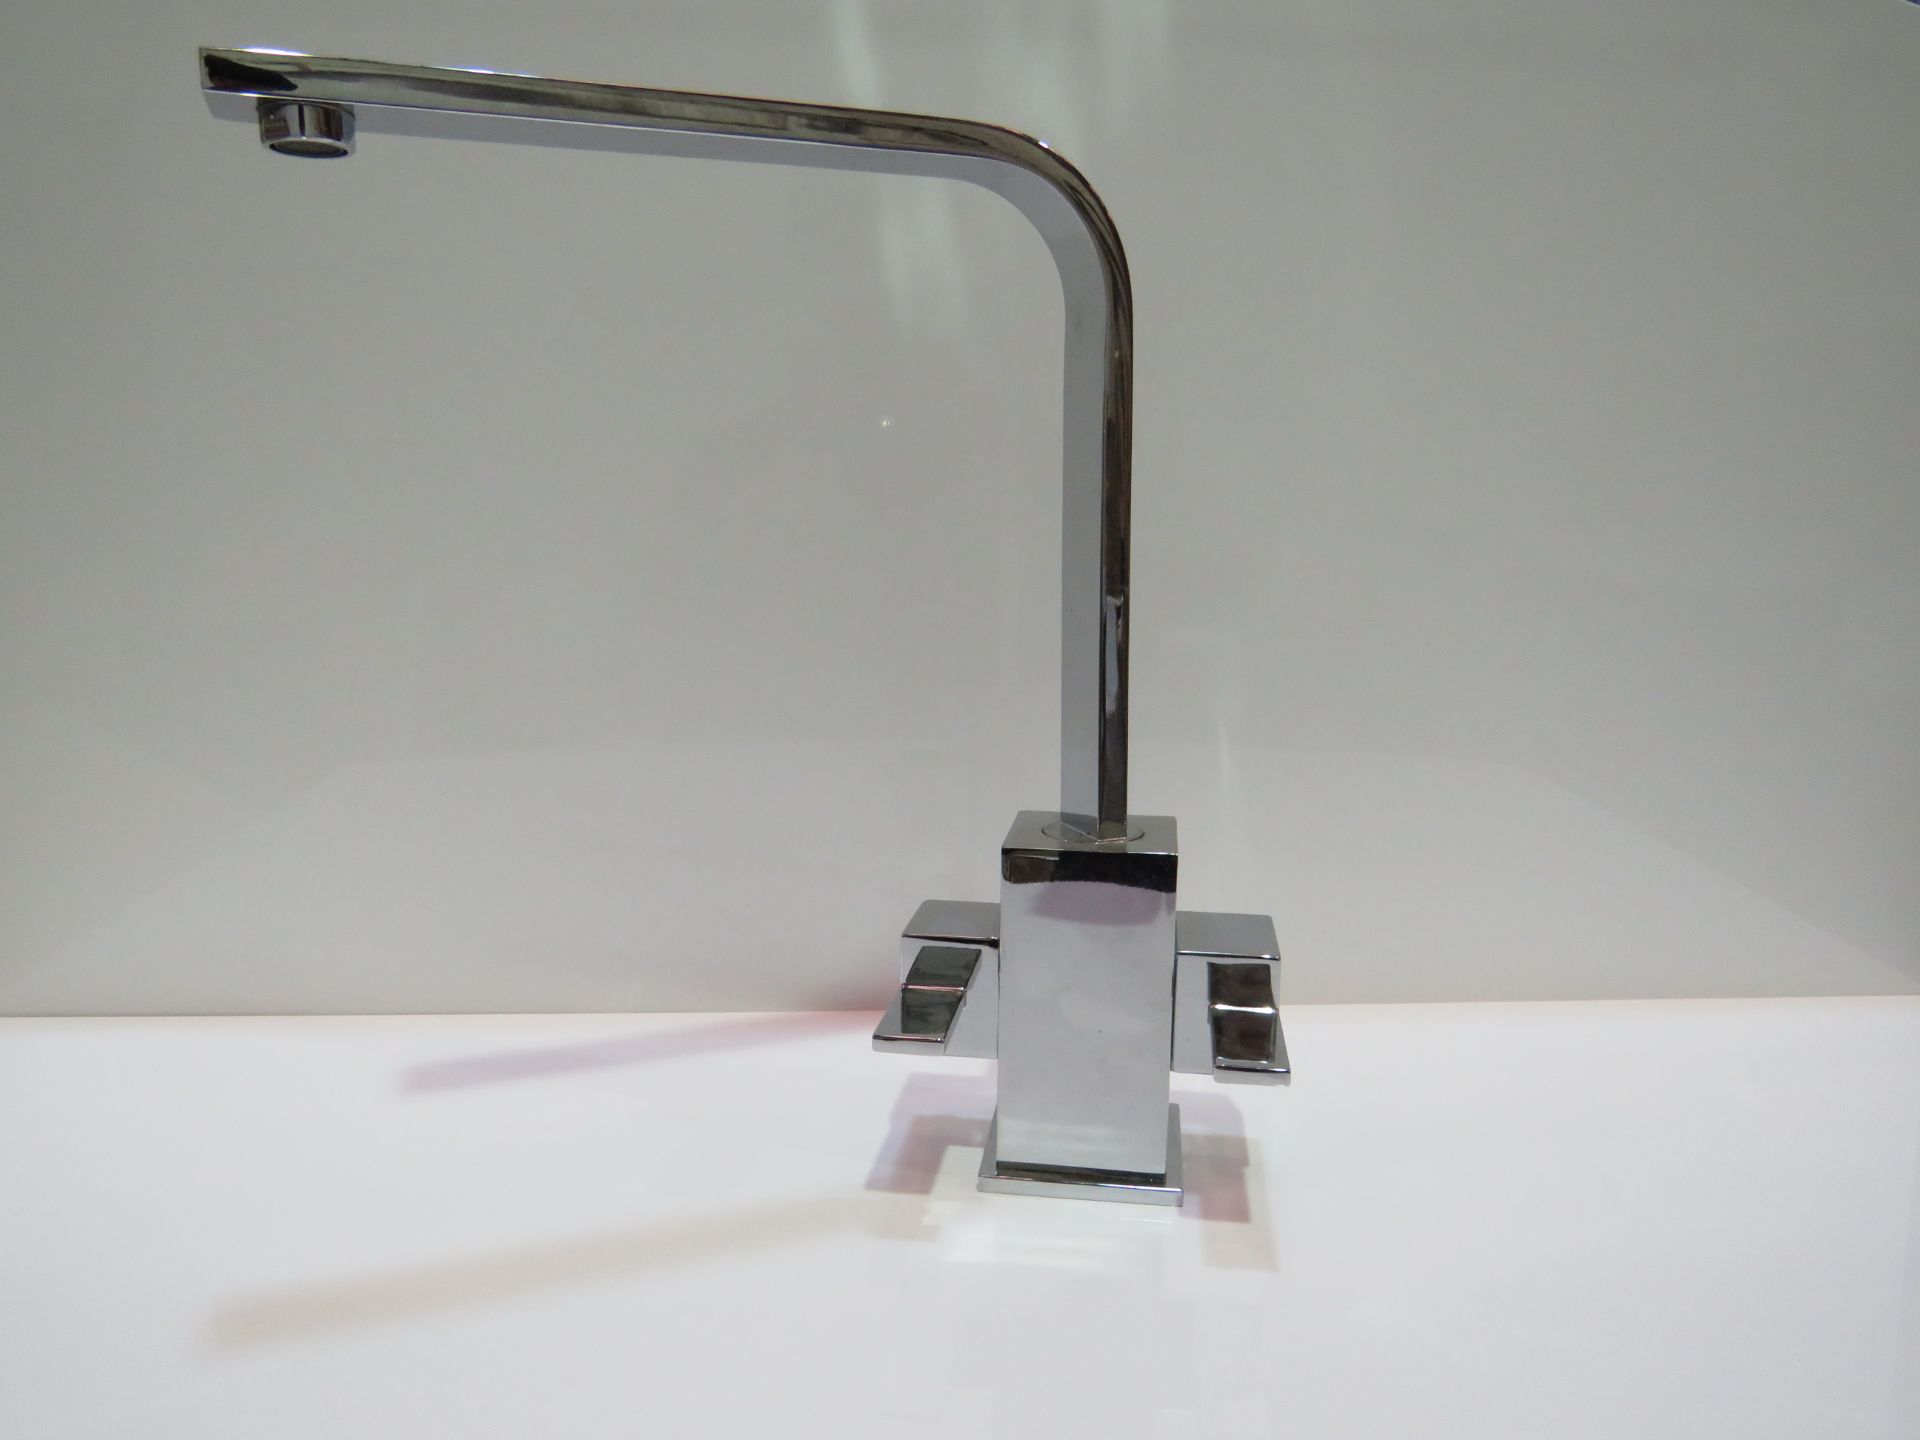 KTA Dual Lever Mono Kitchen Sink Mixer Tap - Chrome - New & Boxed. - Image 2 of 2